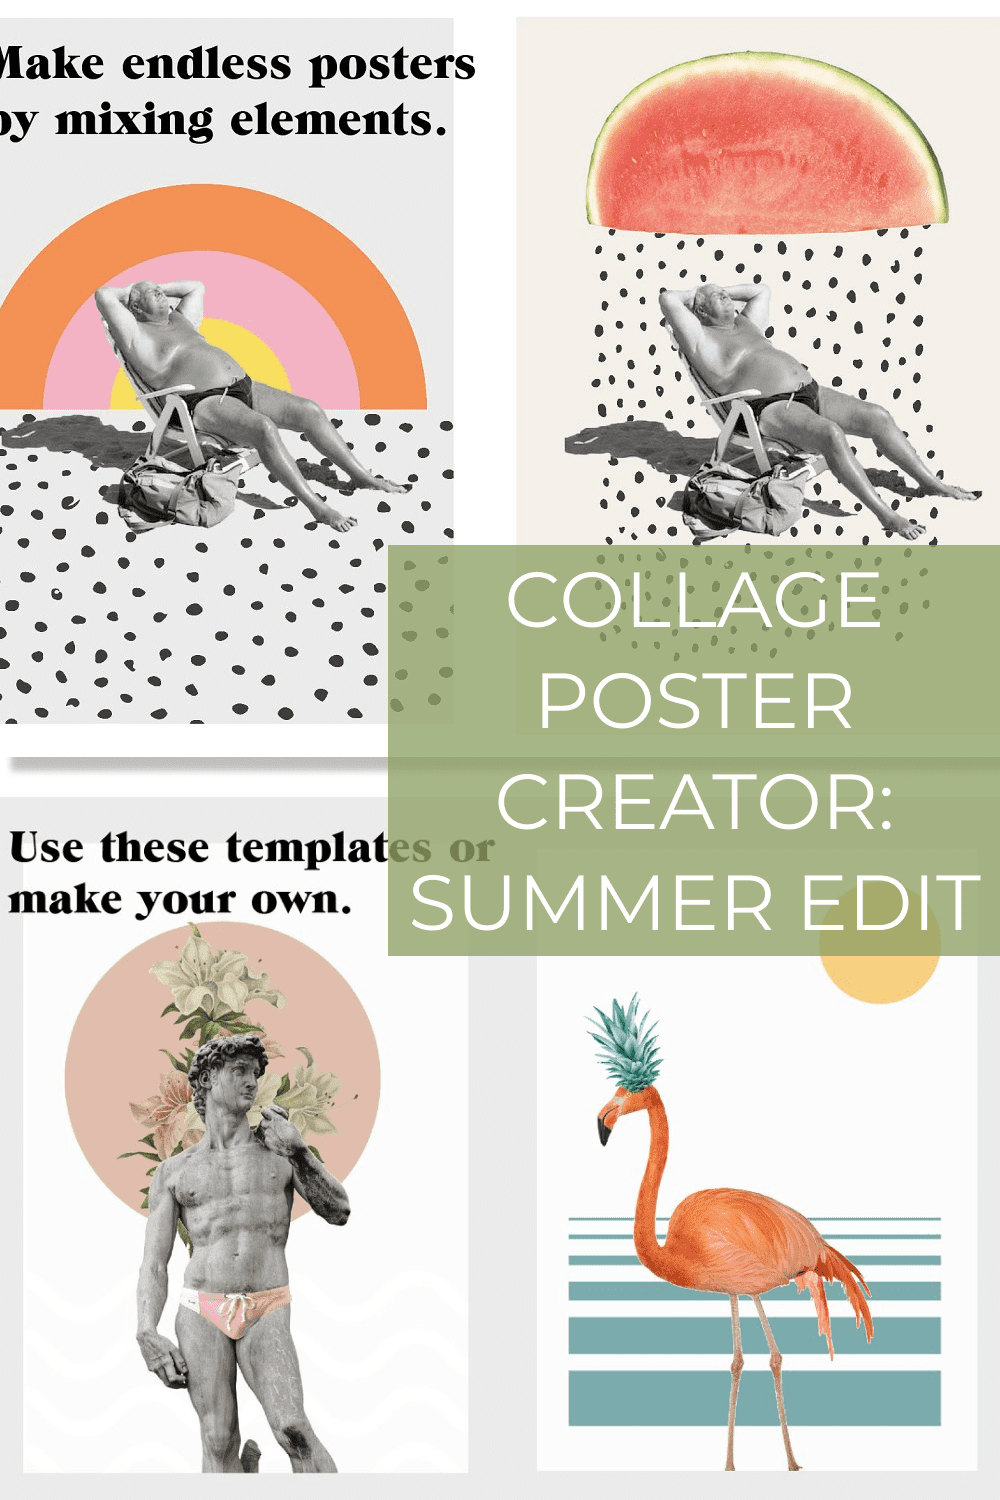 Collage Poster Creator Summer edit Pinterest image.